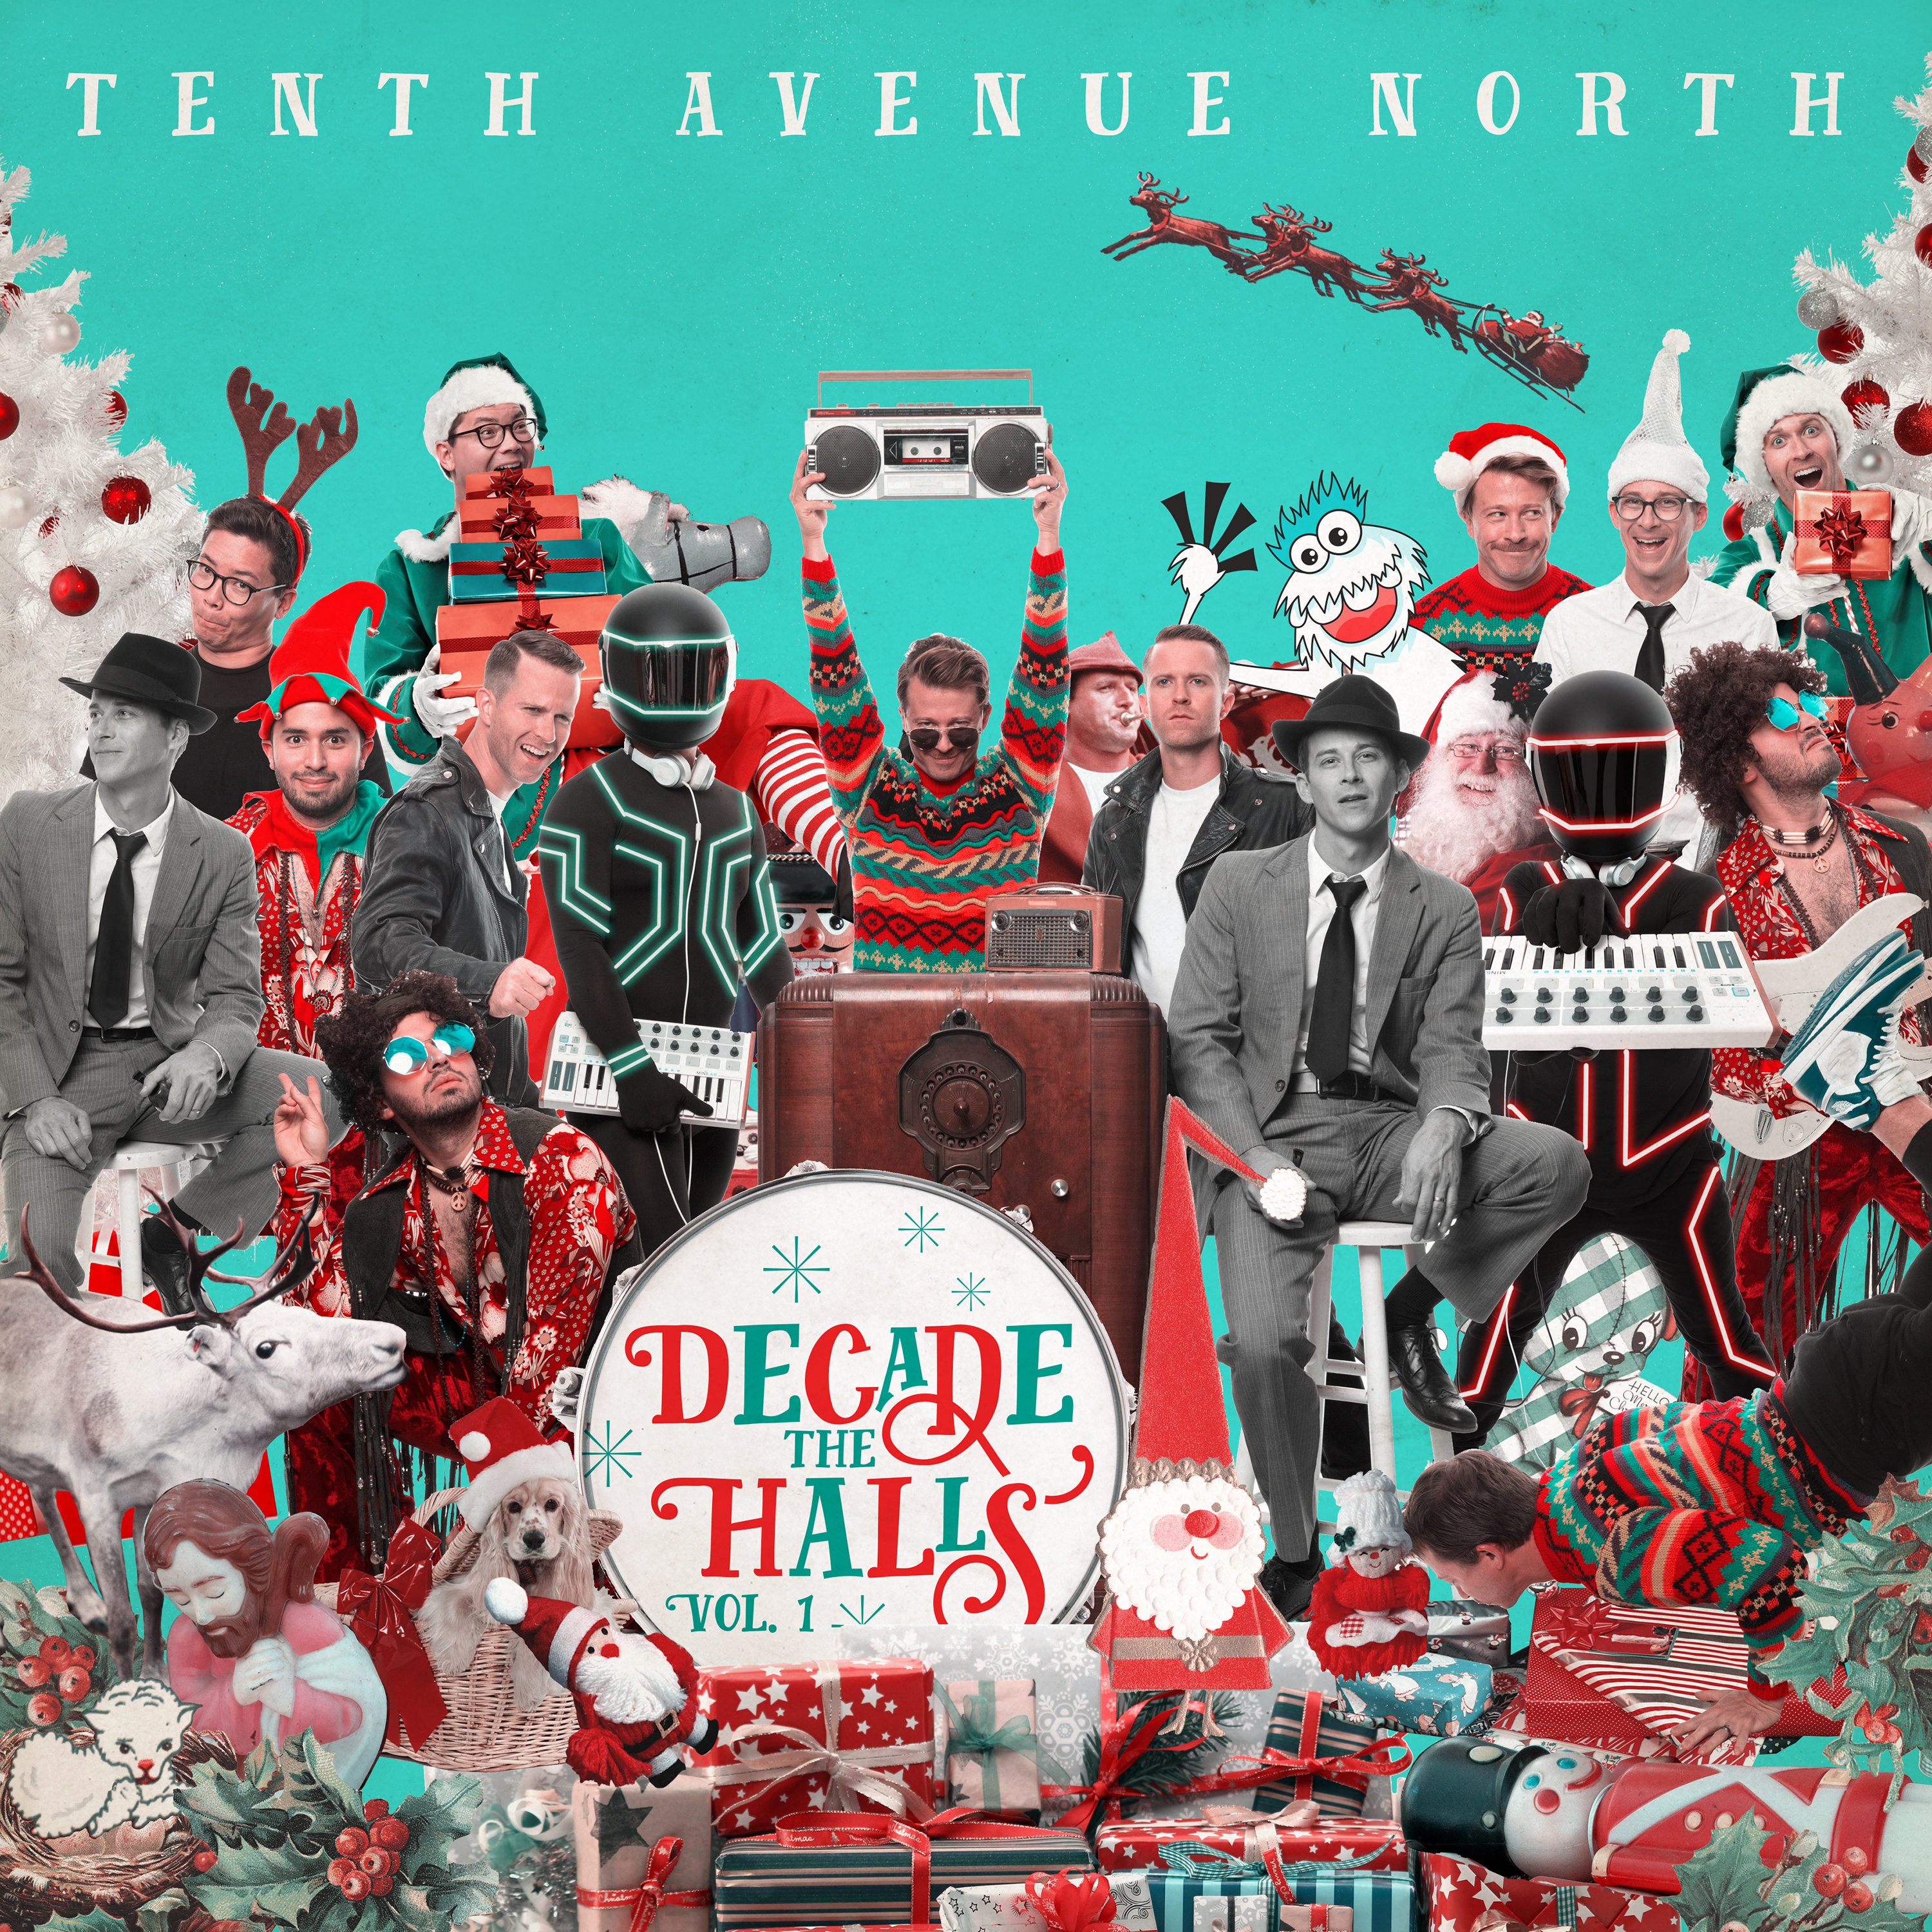 Tenth Avenue North - Decade The Halls, Vol. 1